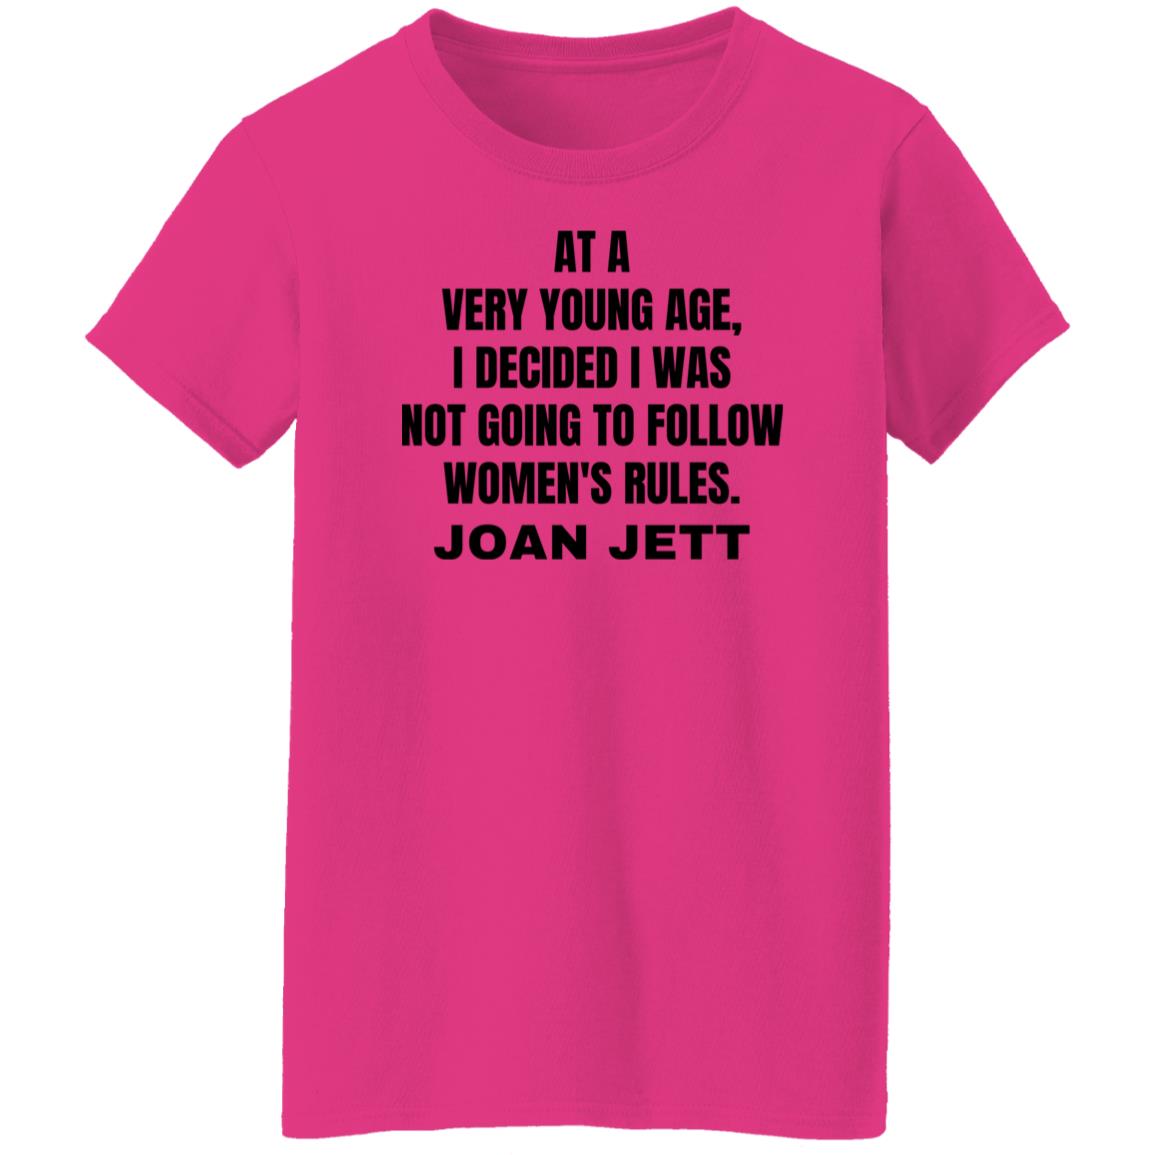 Joan Jett Women's Rules Quote T-Shirt